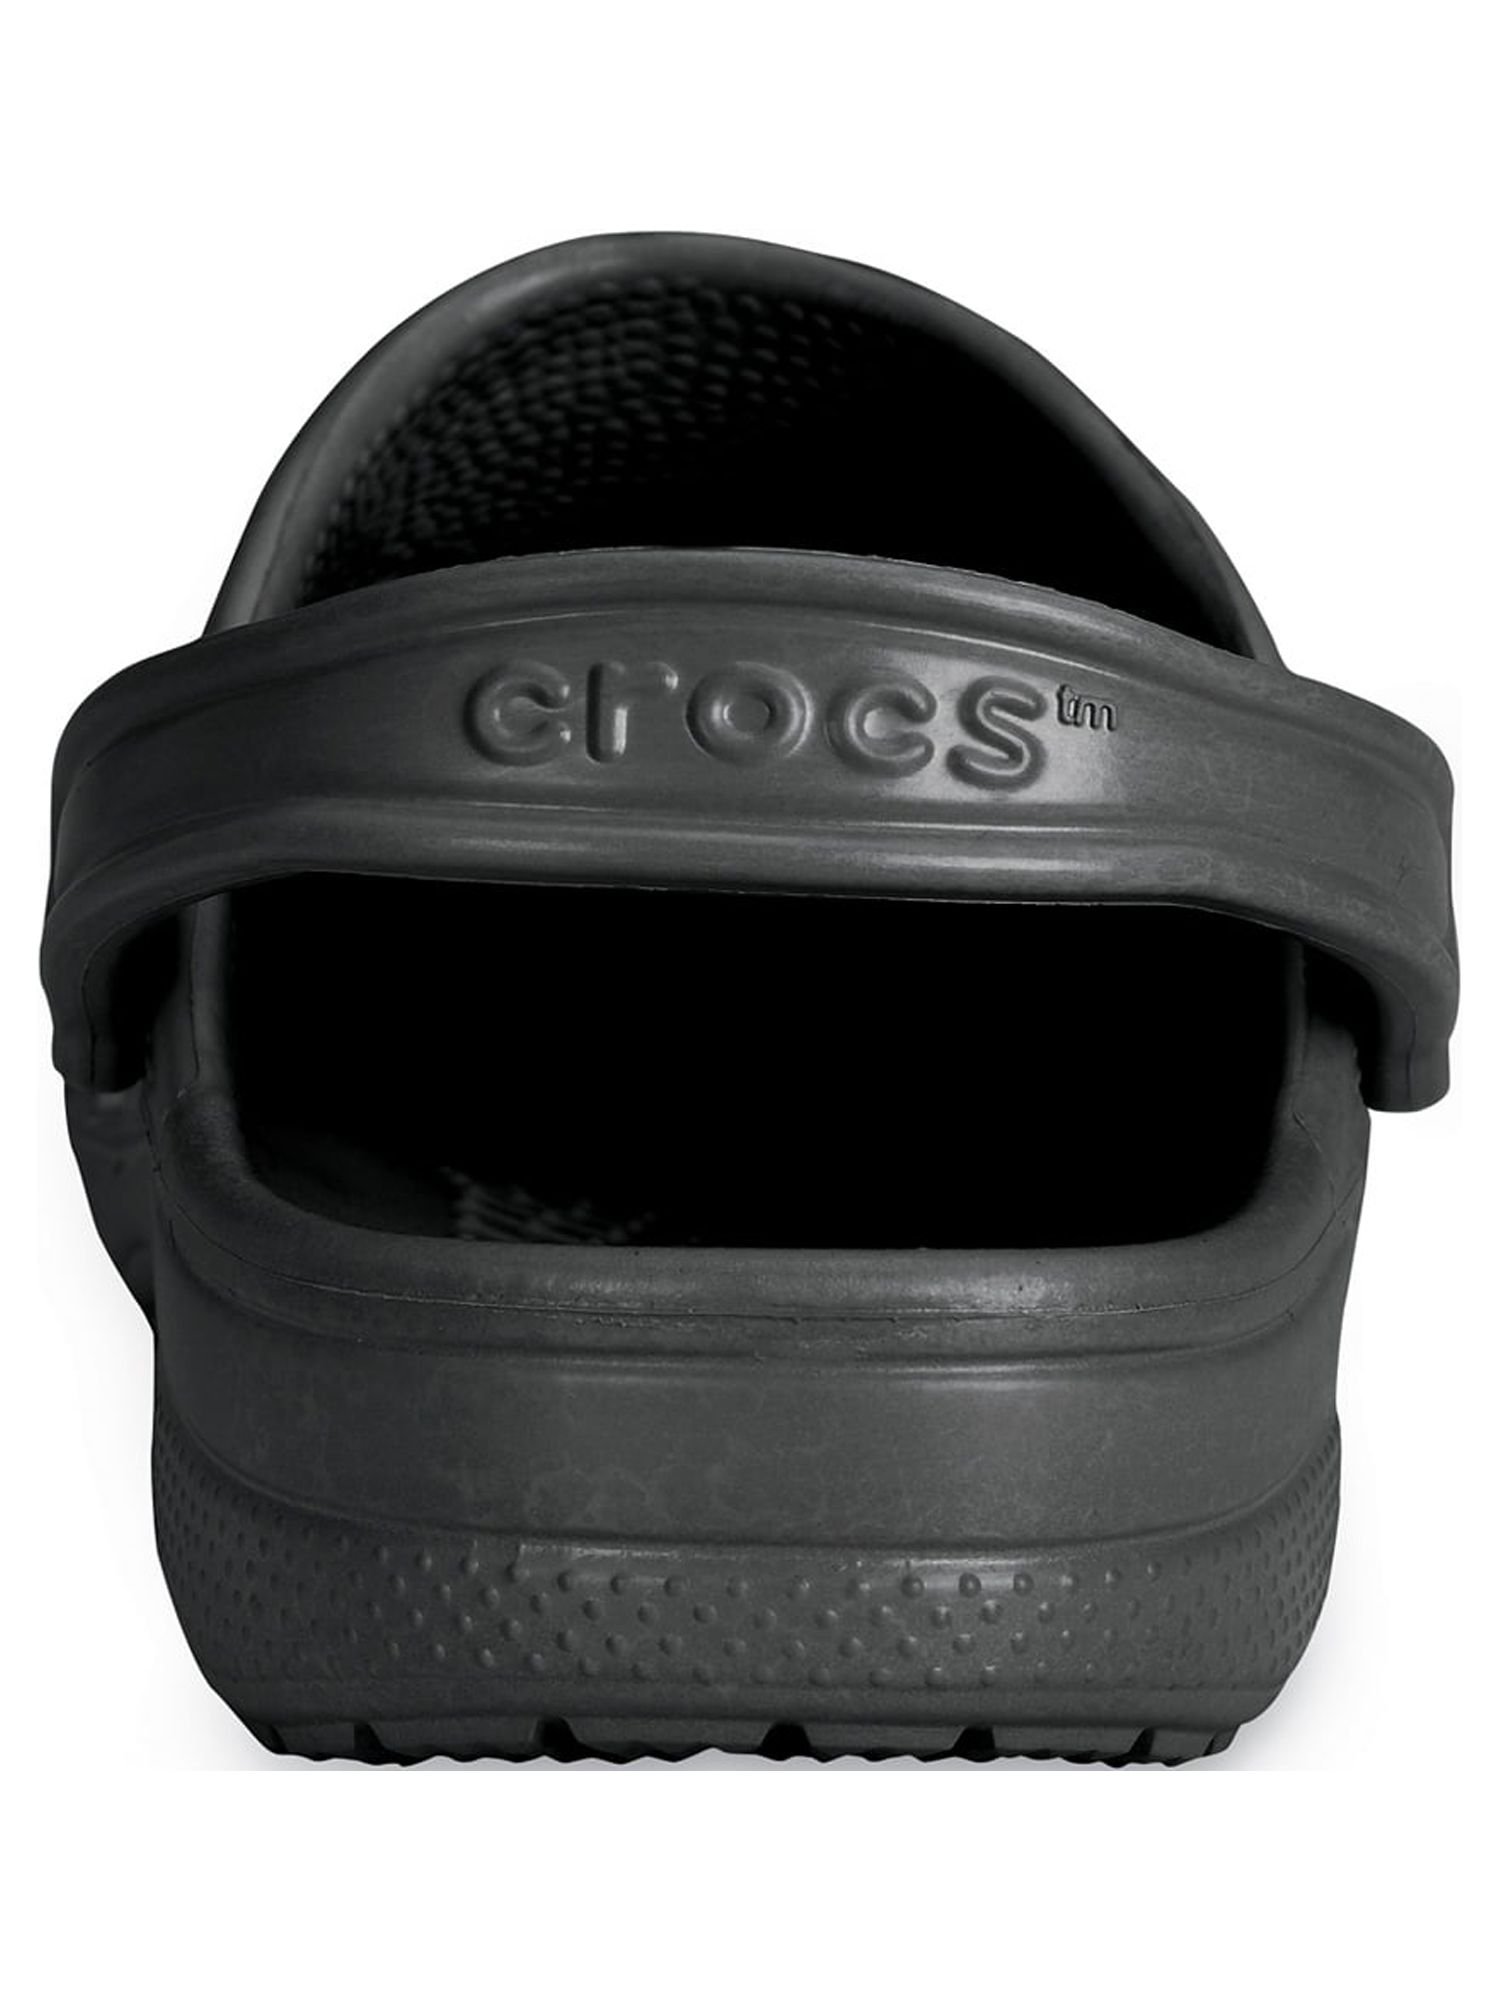 Crocs Men's and Women's Unisex Baya Clog Sandals - image 4 of 5